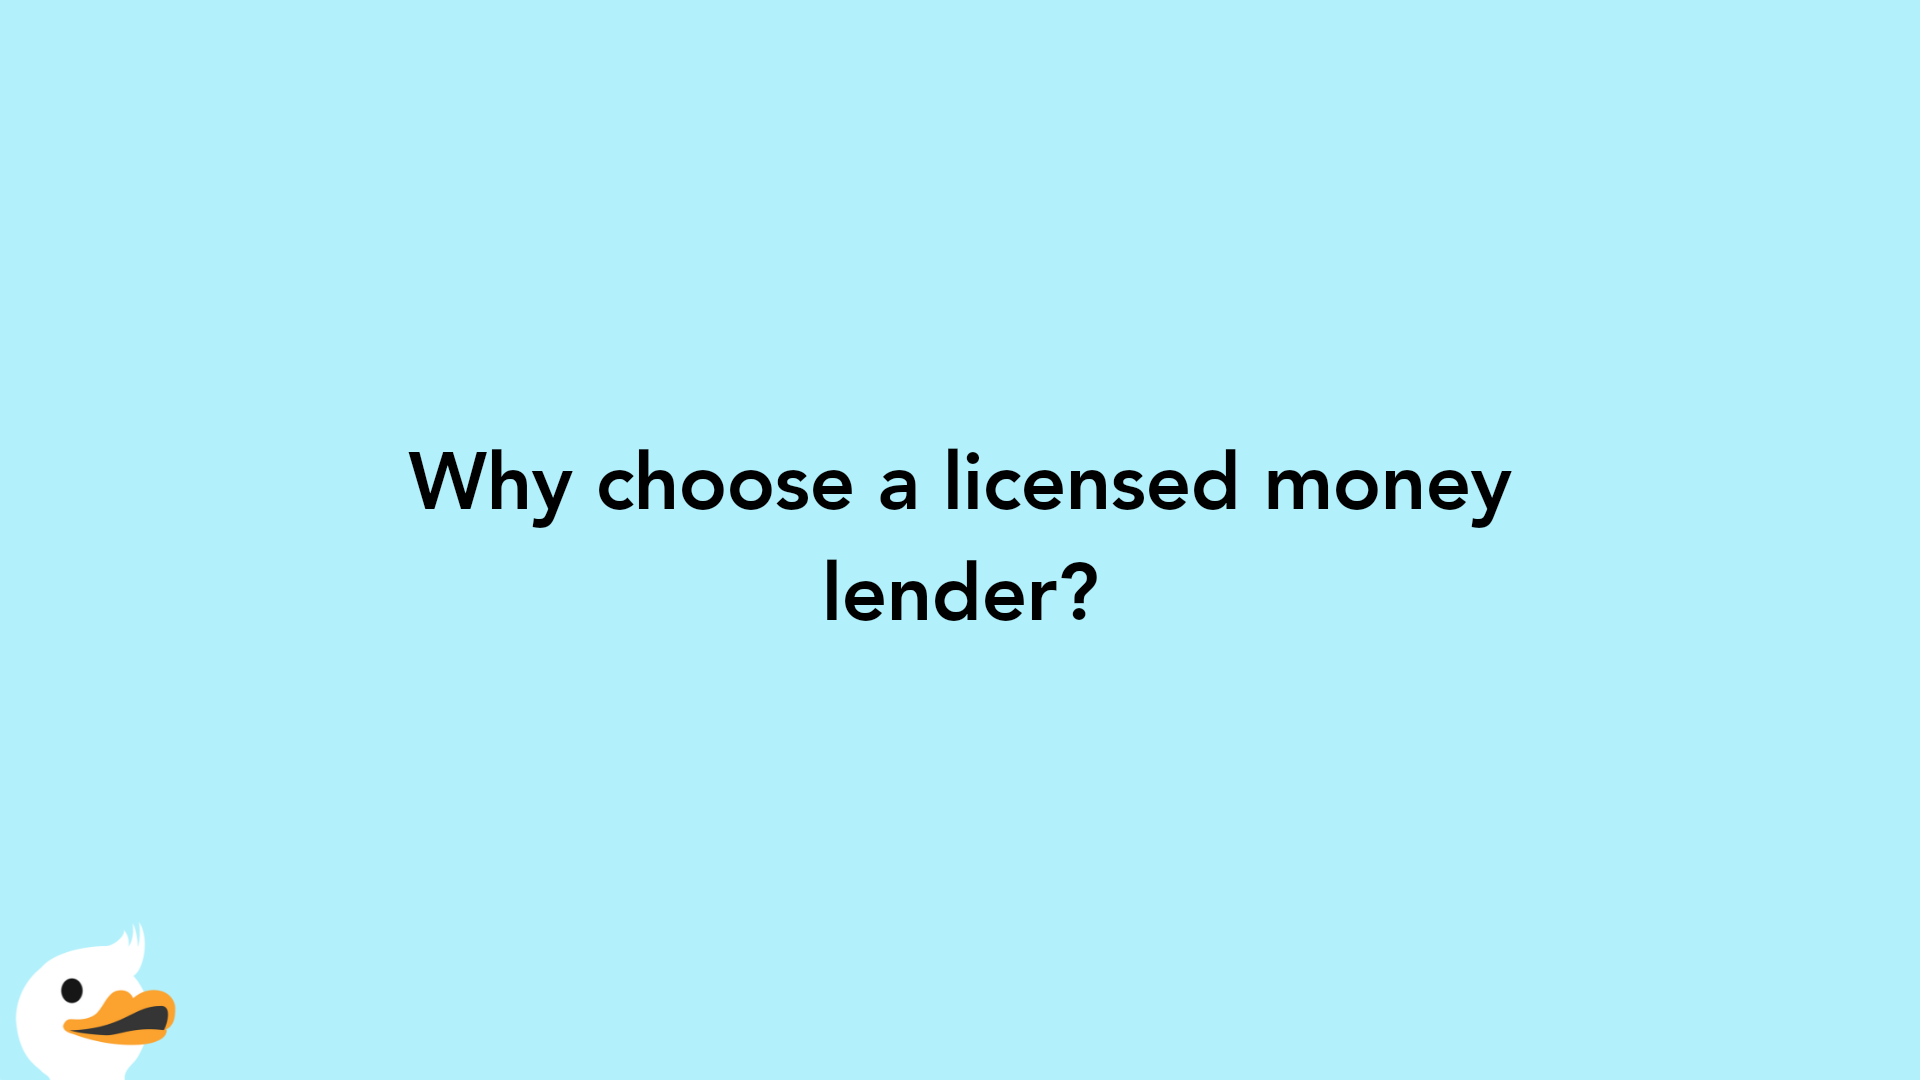 Why choose a licensed money lender?